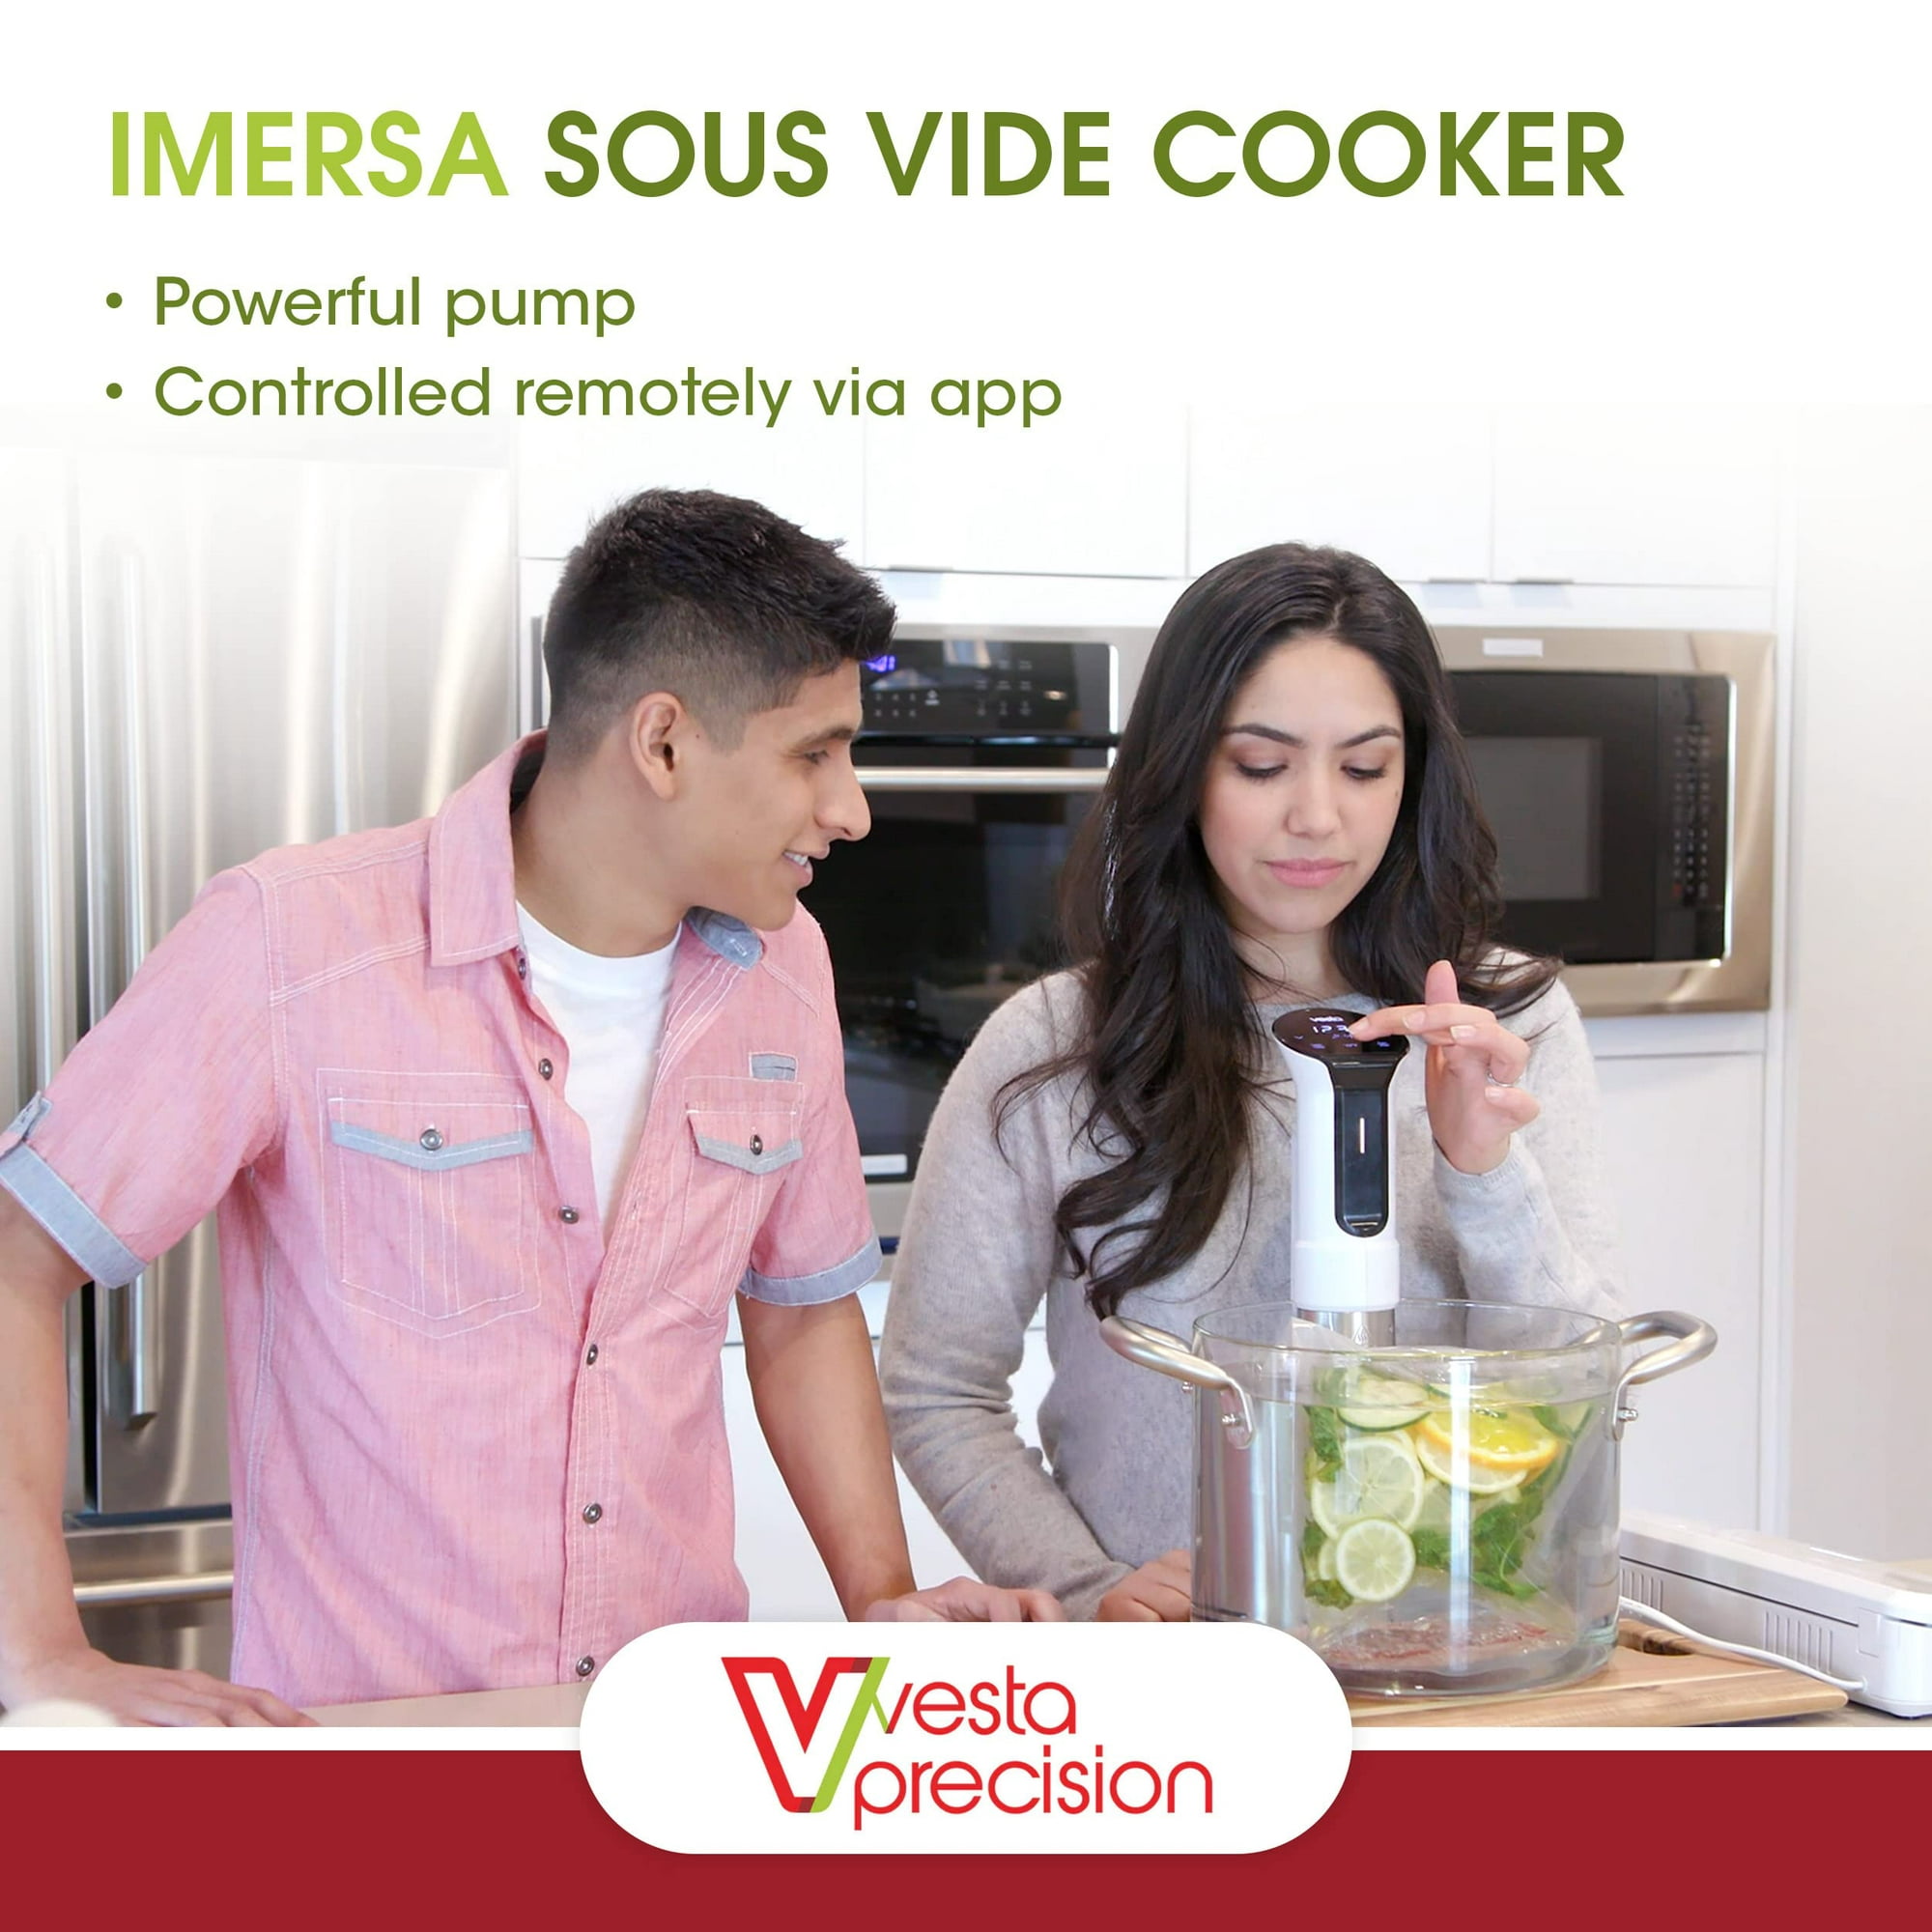 Vesta Precision Sous Vide Cooker - Imersa - Pump WiFi Immersion Circulator - For Precision - Large Readable Display - Digital Touch Panel - 900 Watts | Walmart Canada